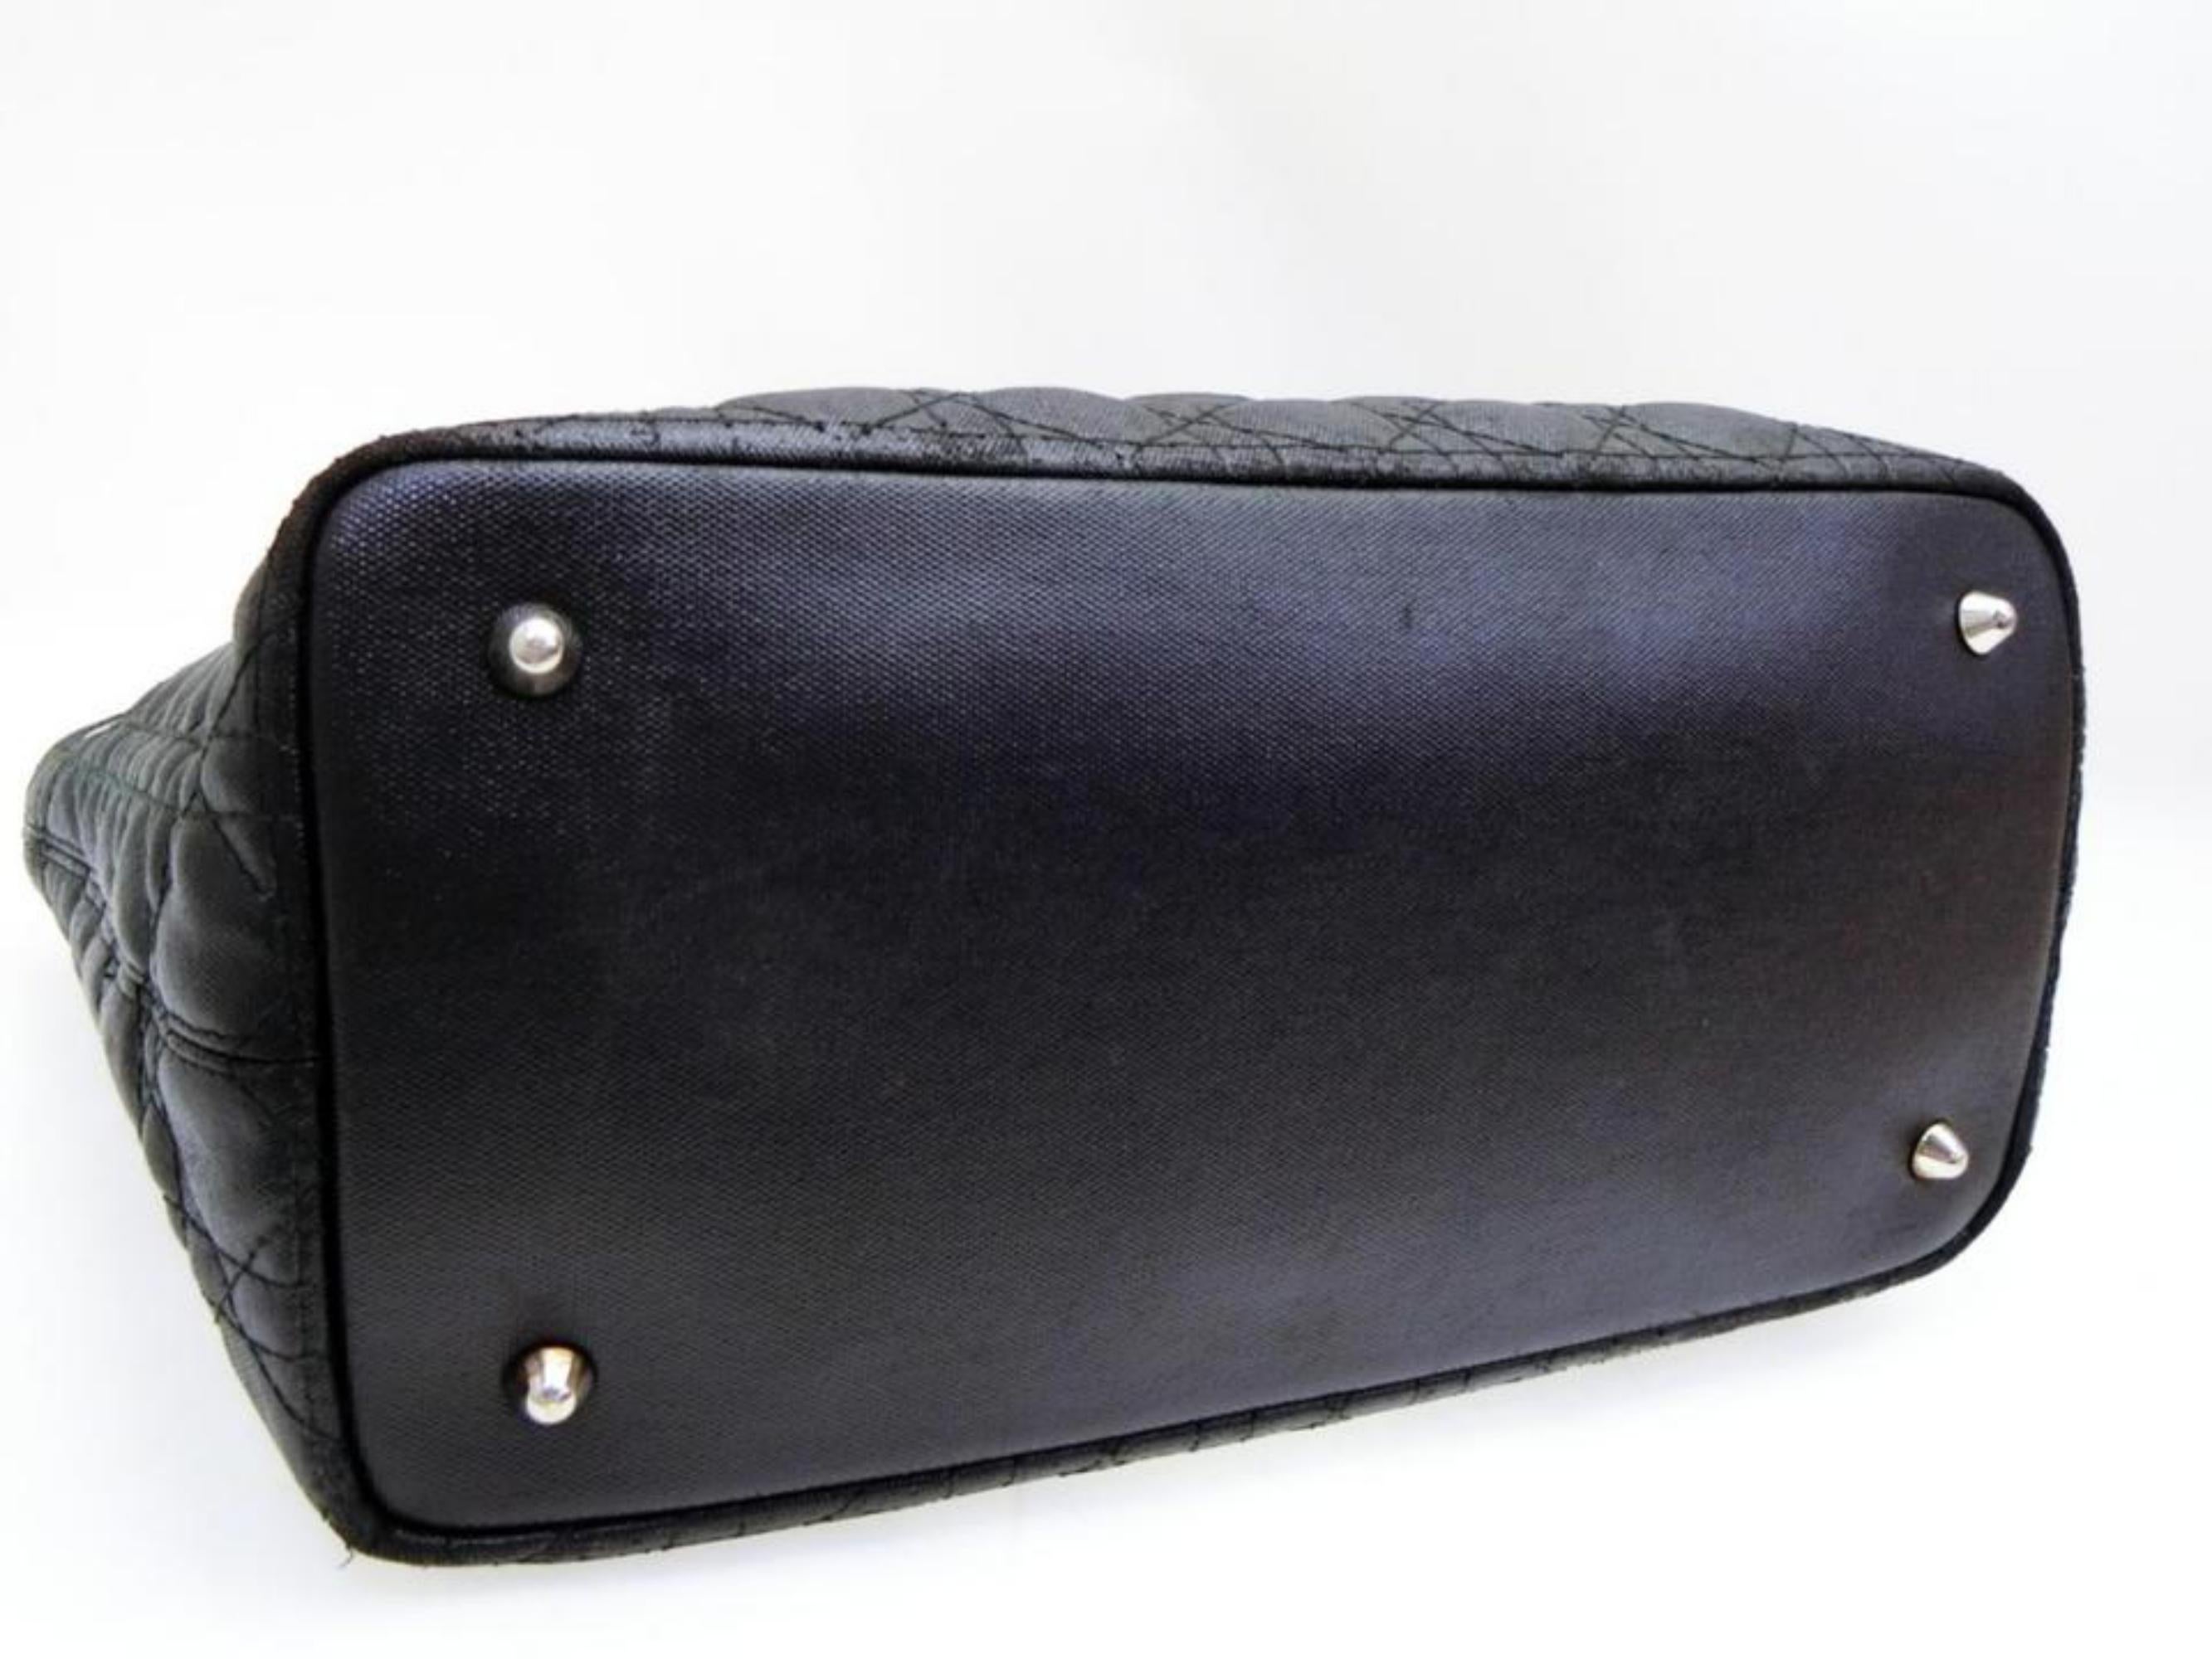 Dior Quilted Leather Cannage Shopper Tote 233793 Black Canvas Shoulder Bag For Sale 8